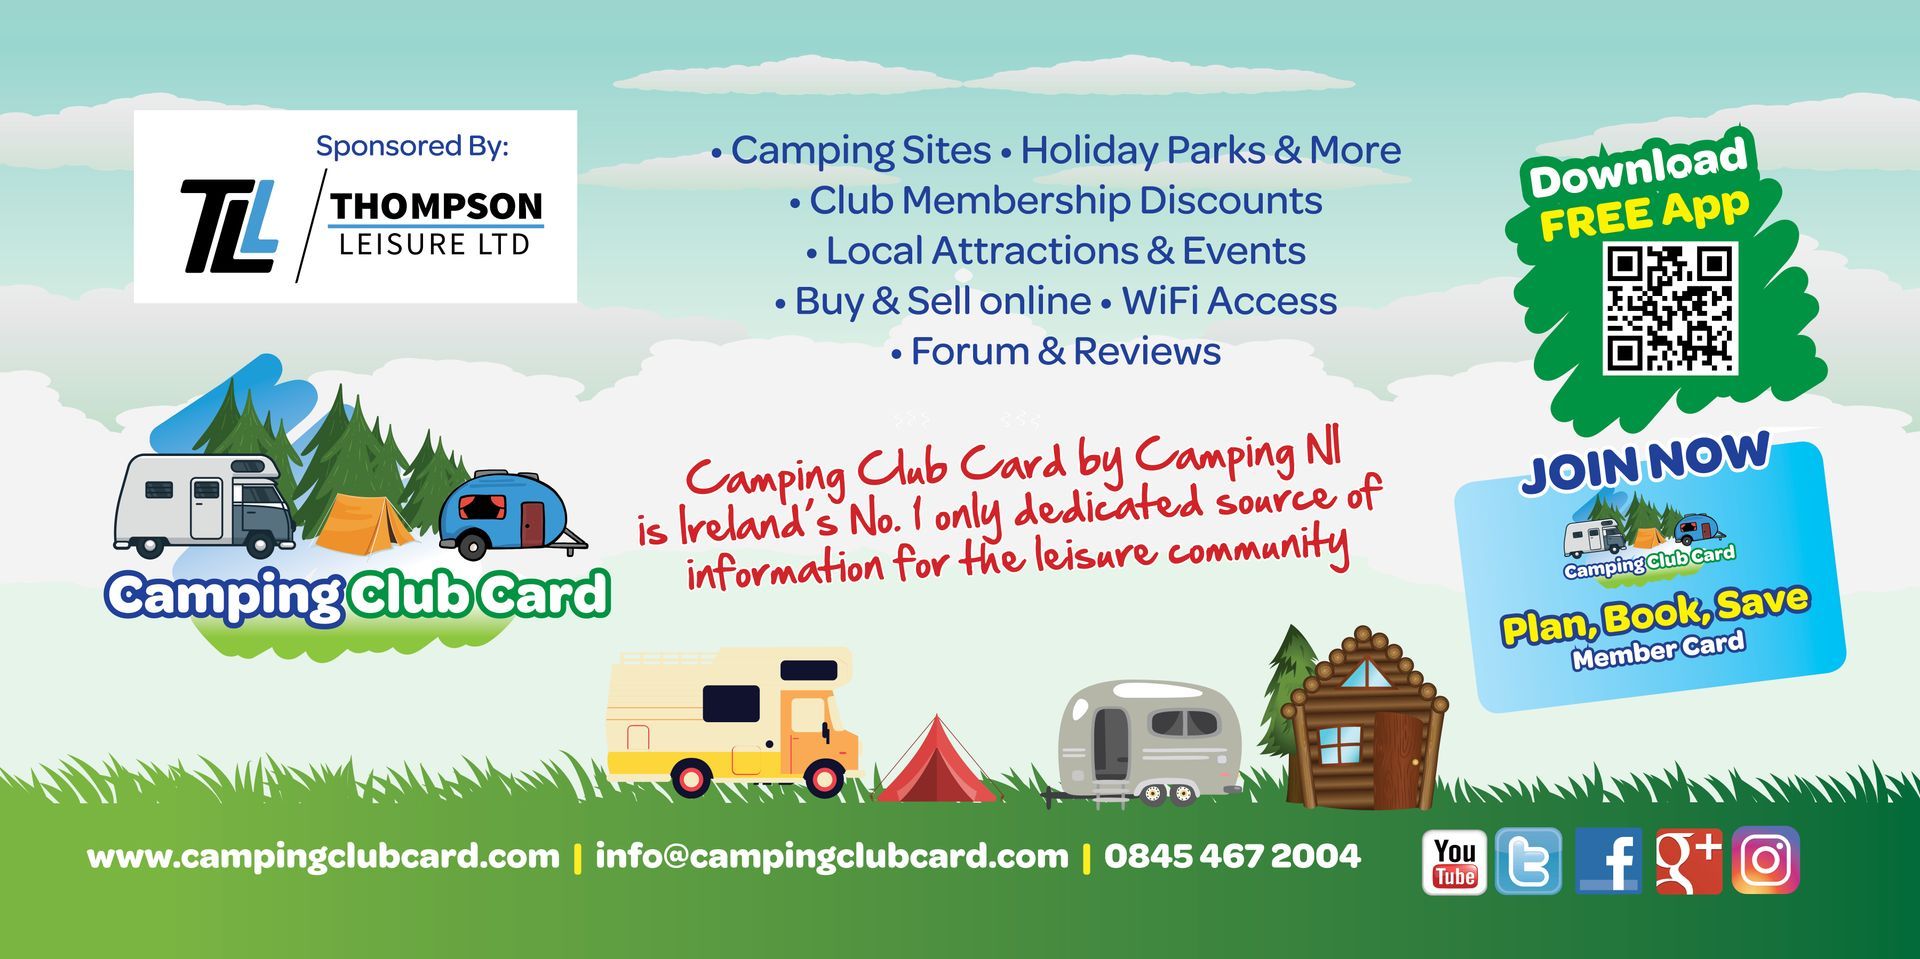 Join CampingNI club membership now